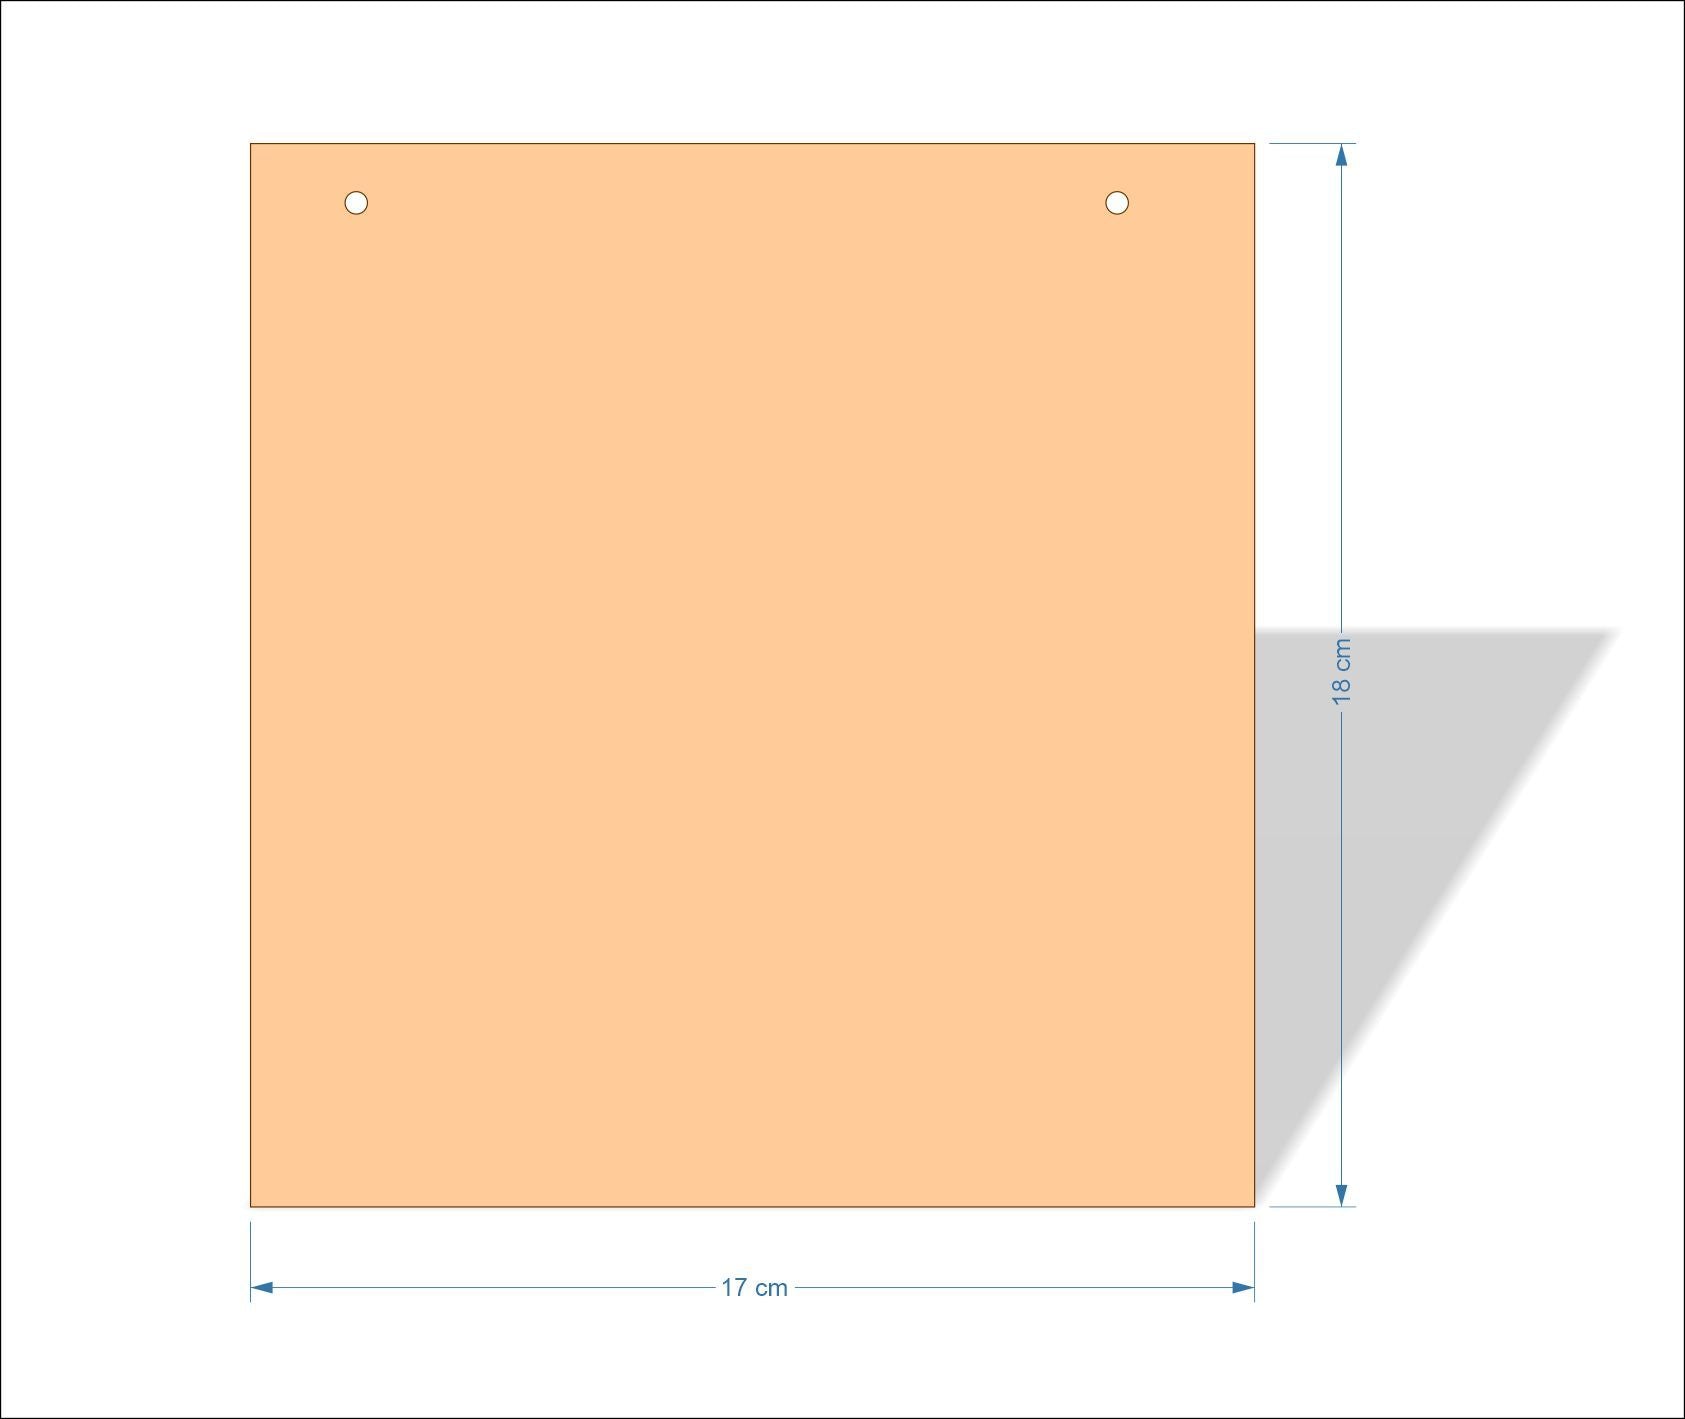 17 cm X 18 cm 3mm MDF Plaques with square corners